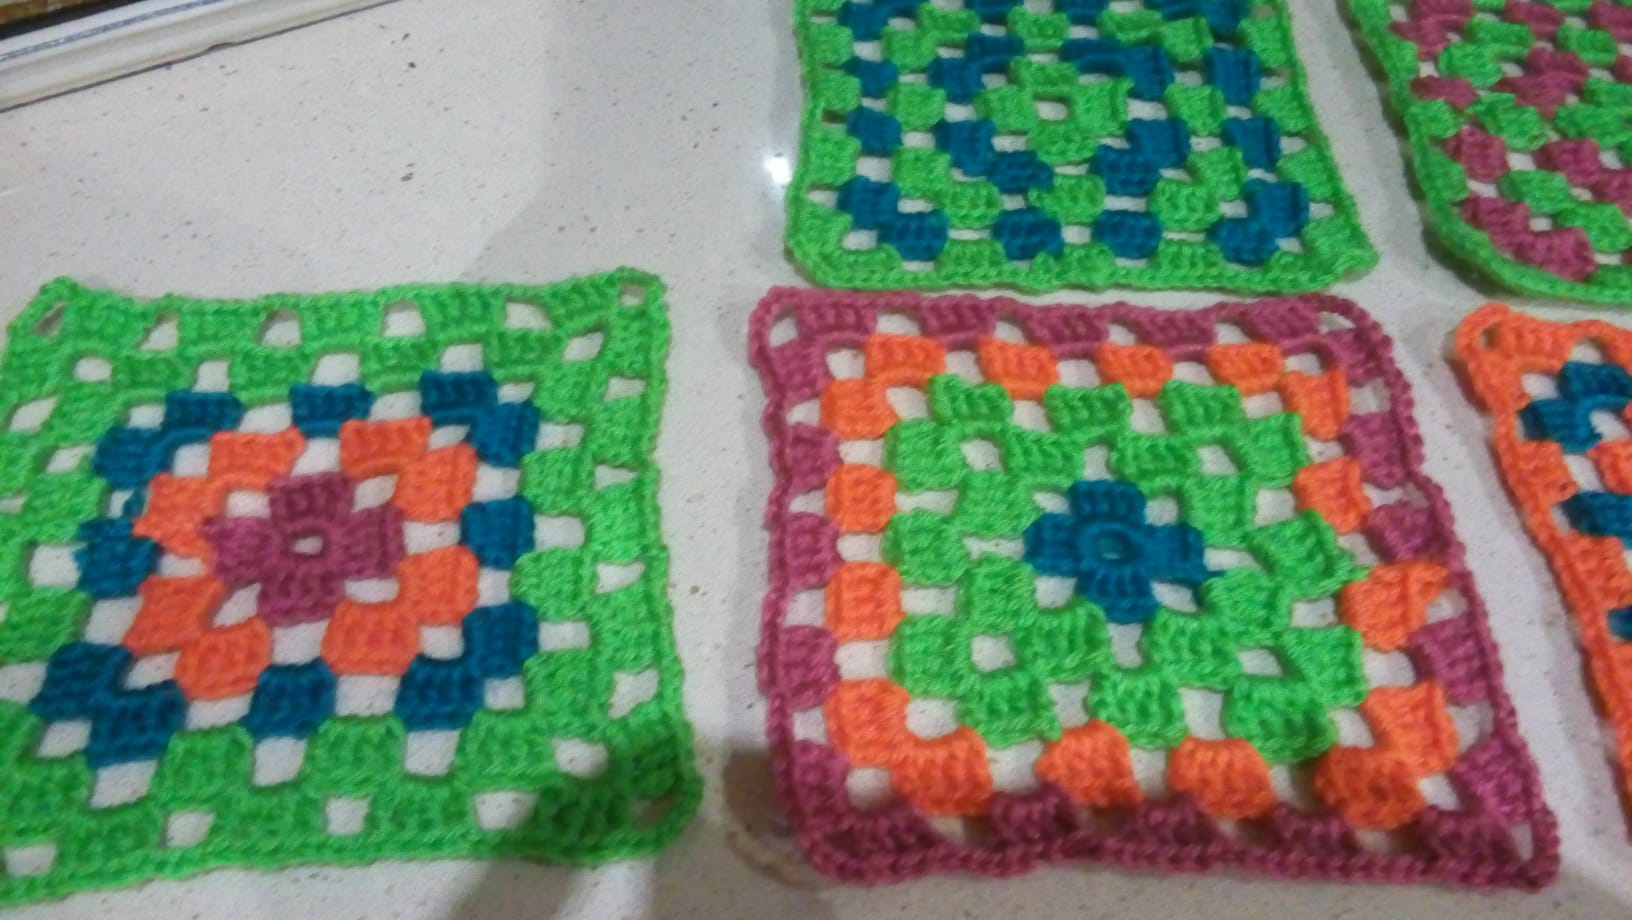 <span  class="uc_style_uc_tiles_grid_image_elementor_uc_items_attribute_title" style="color:#ffffff;">Modelo dos quadrados de crochet</span>